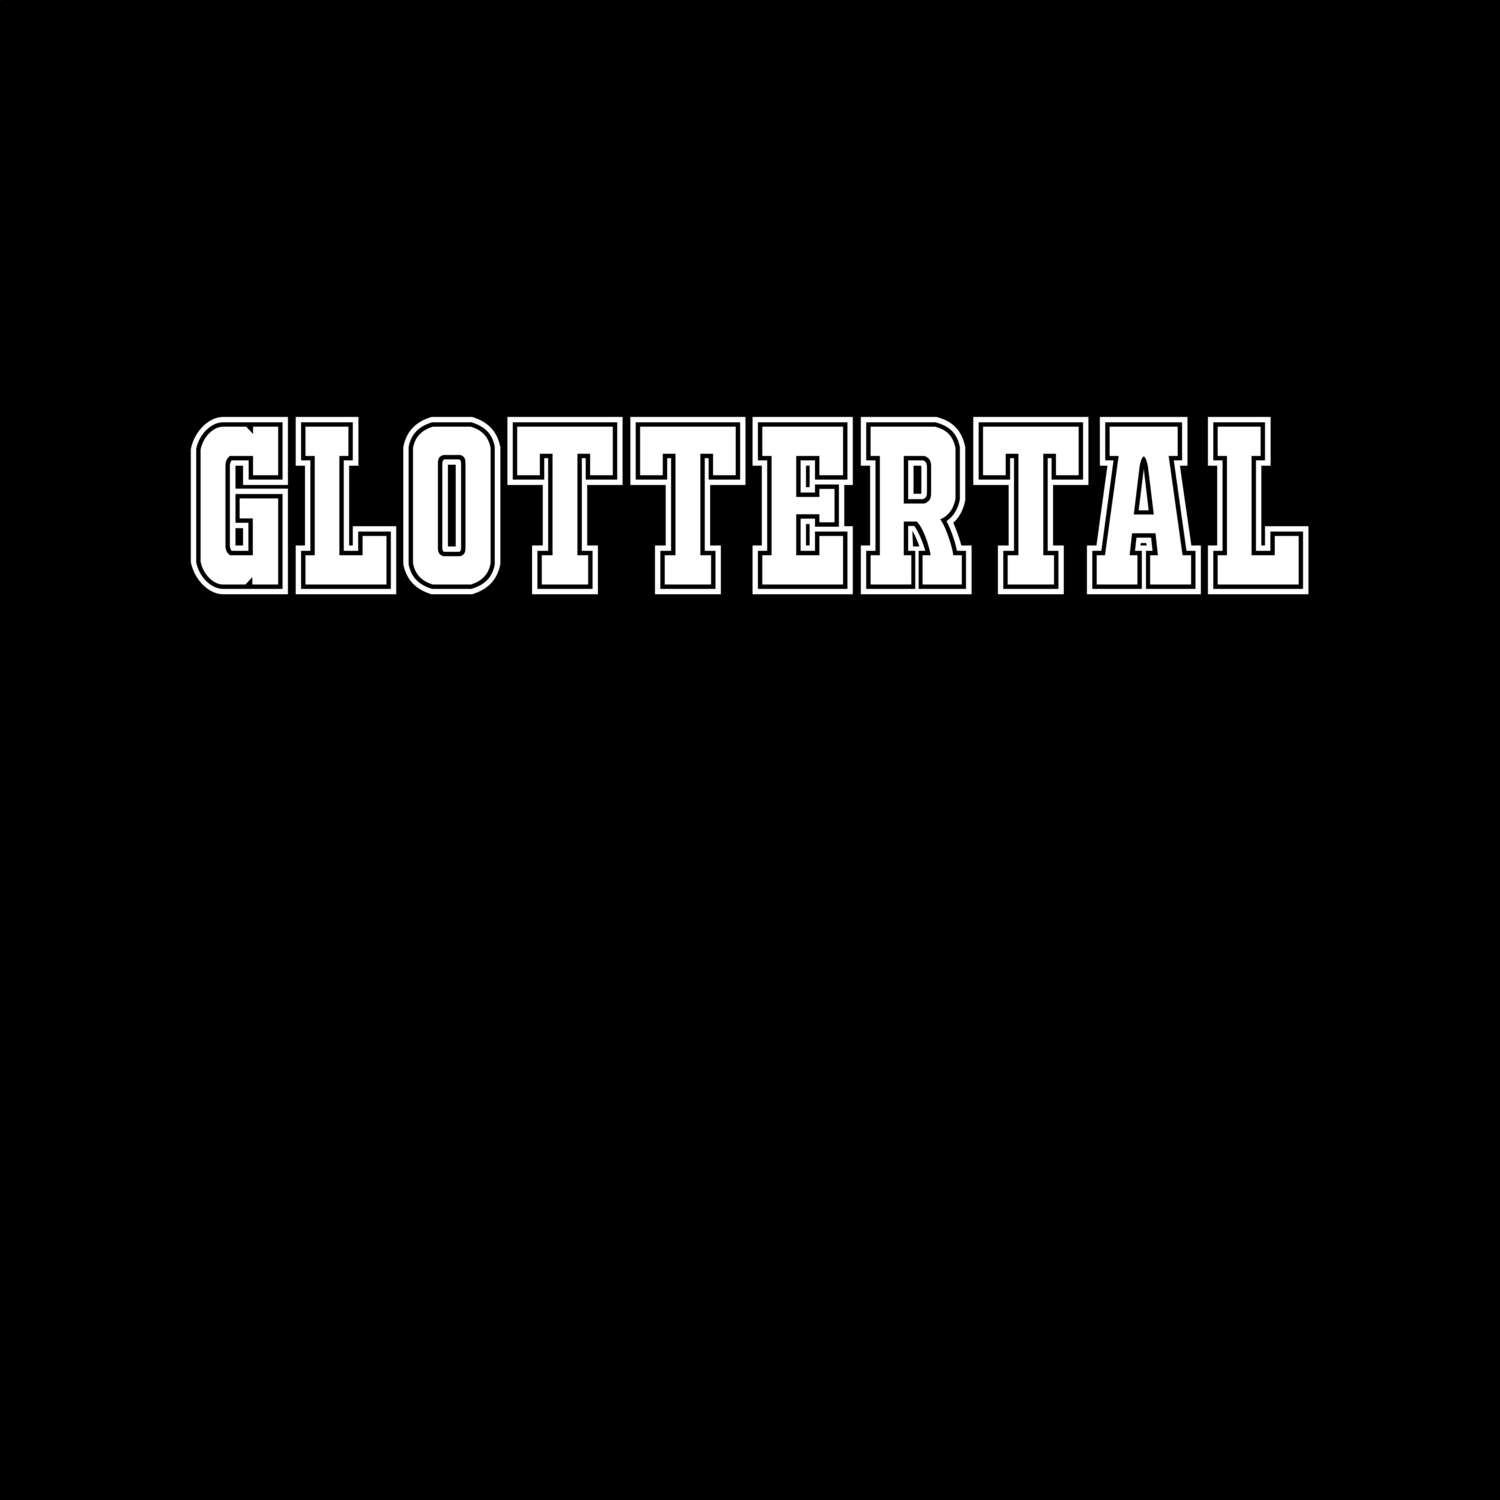 Glottertal T-Shirt »Classic«